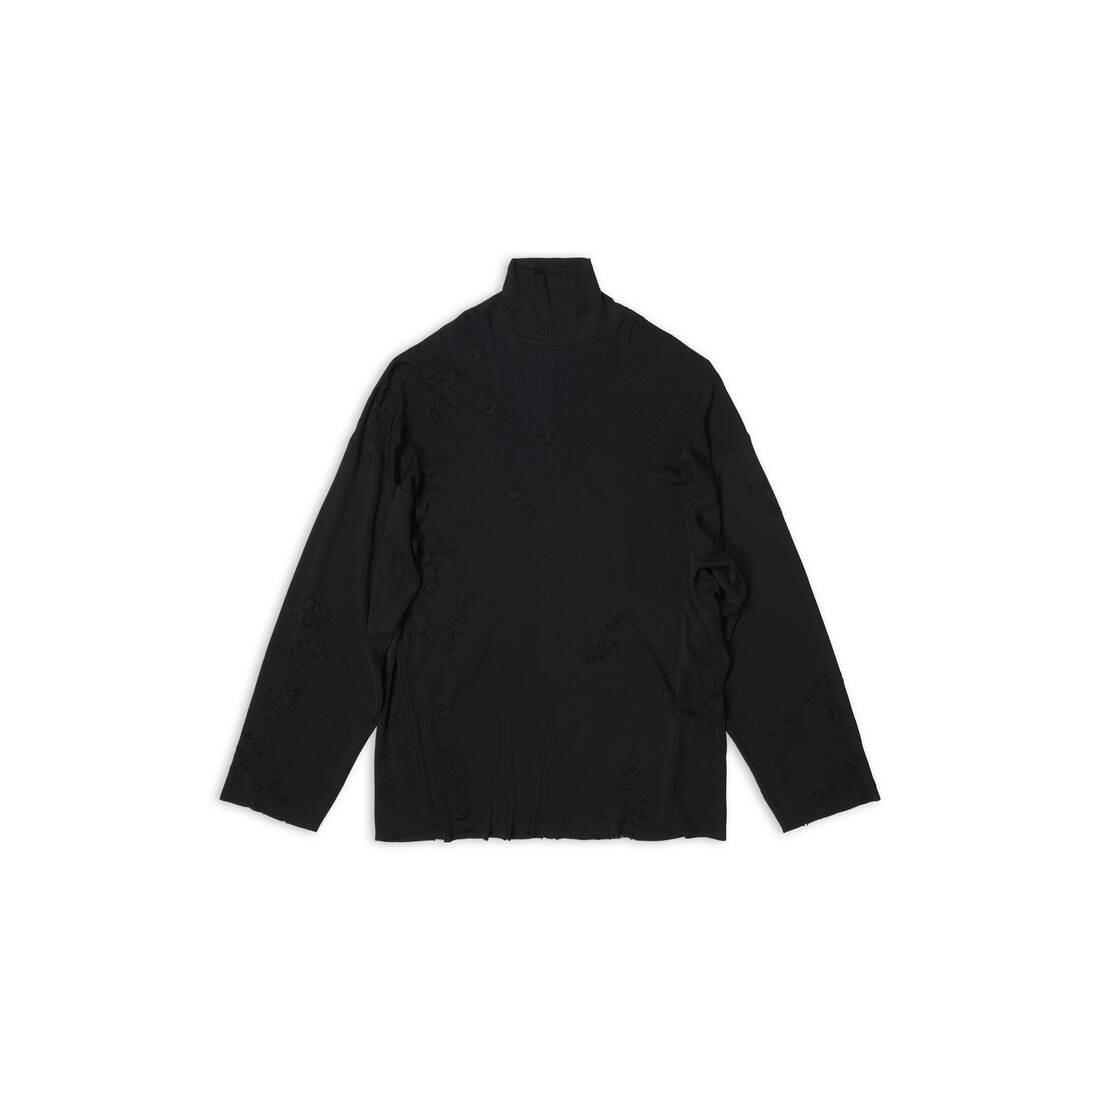 Destroyed Turtleneck Sweater in Black